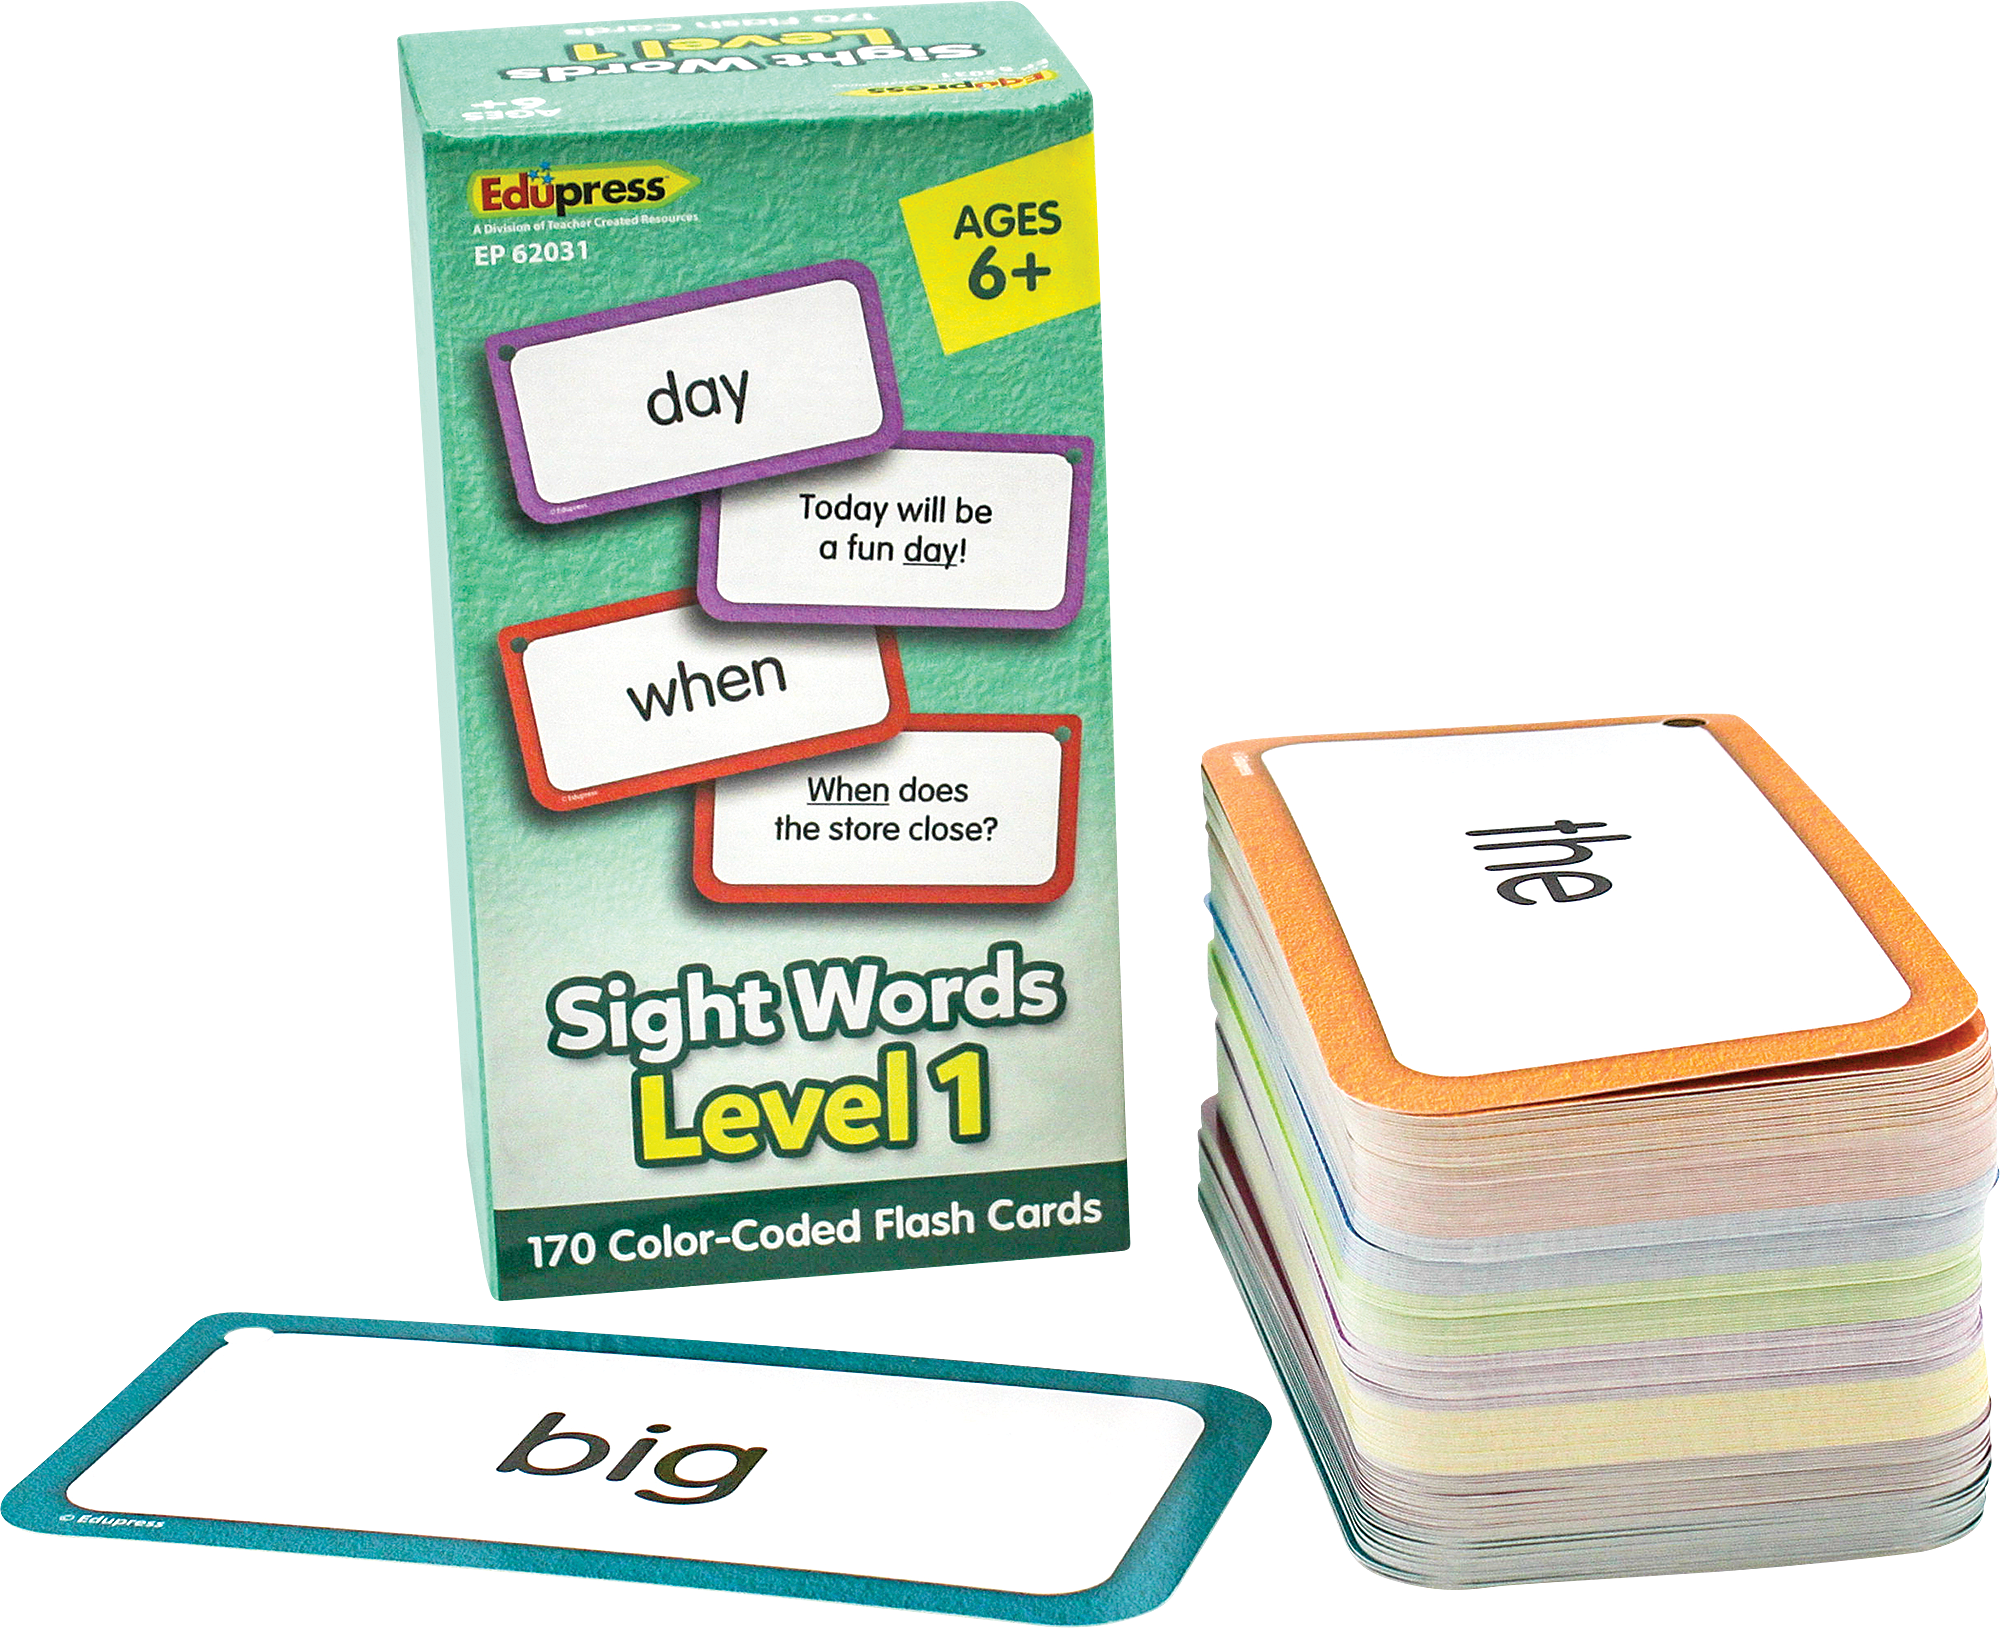 phonics flash cards sight words